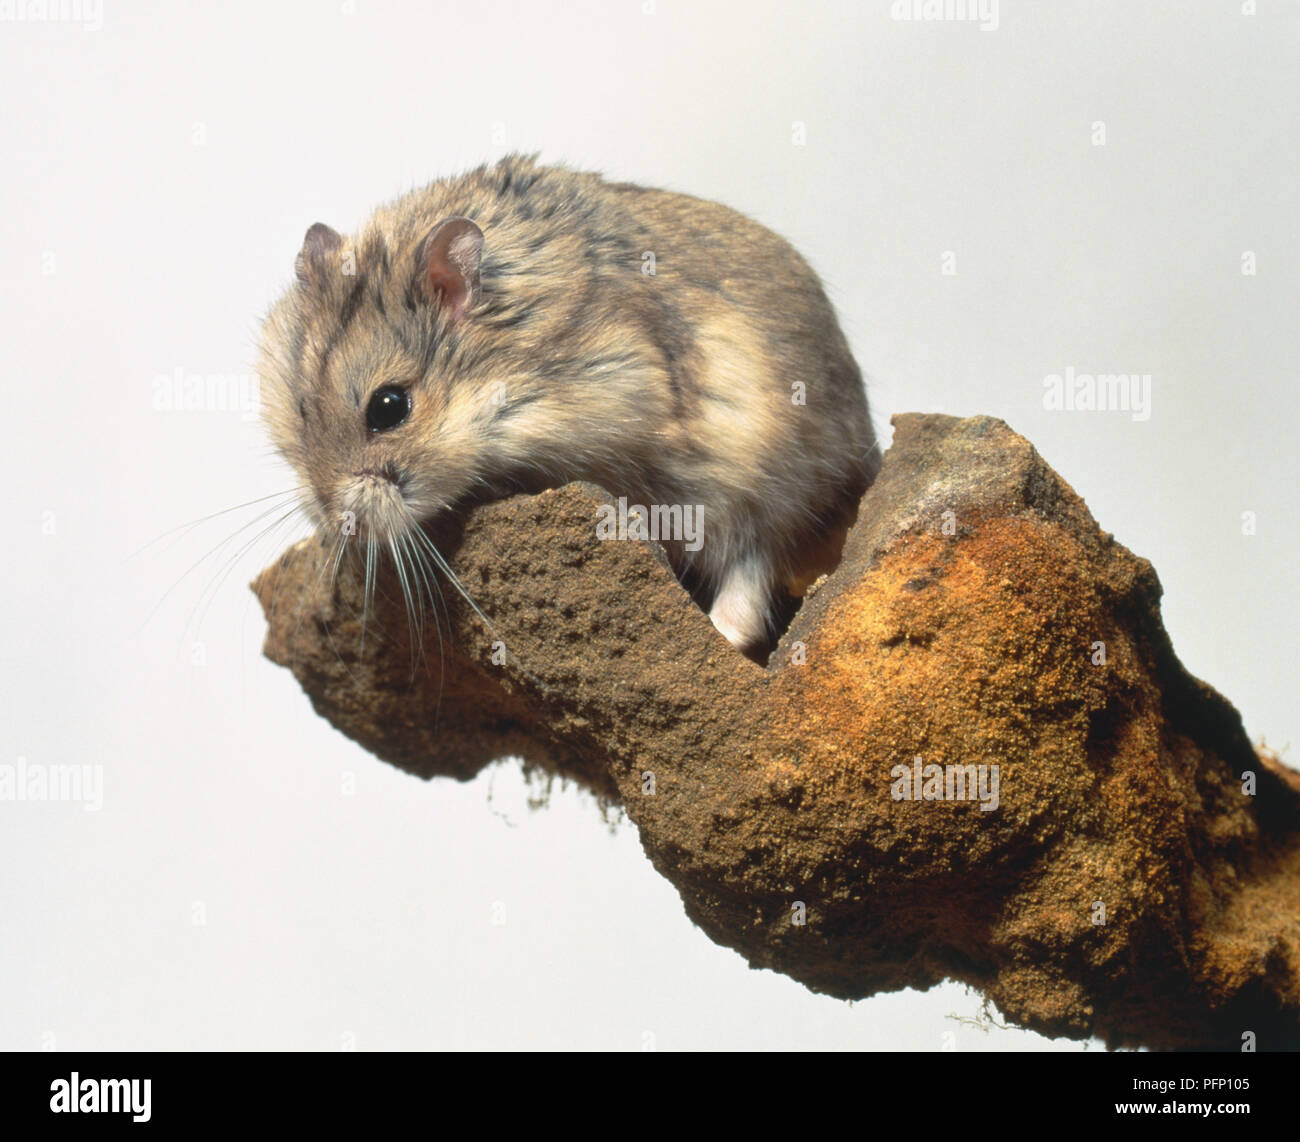 Desert or Roborovski Hamster, Phodopus roborovskii, a dwarf hamster on a stone. Stock Photo